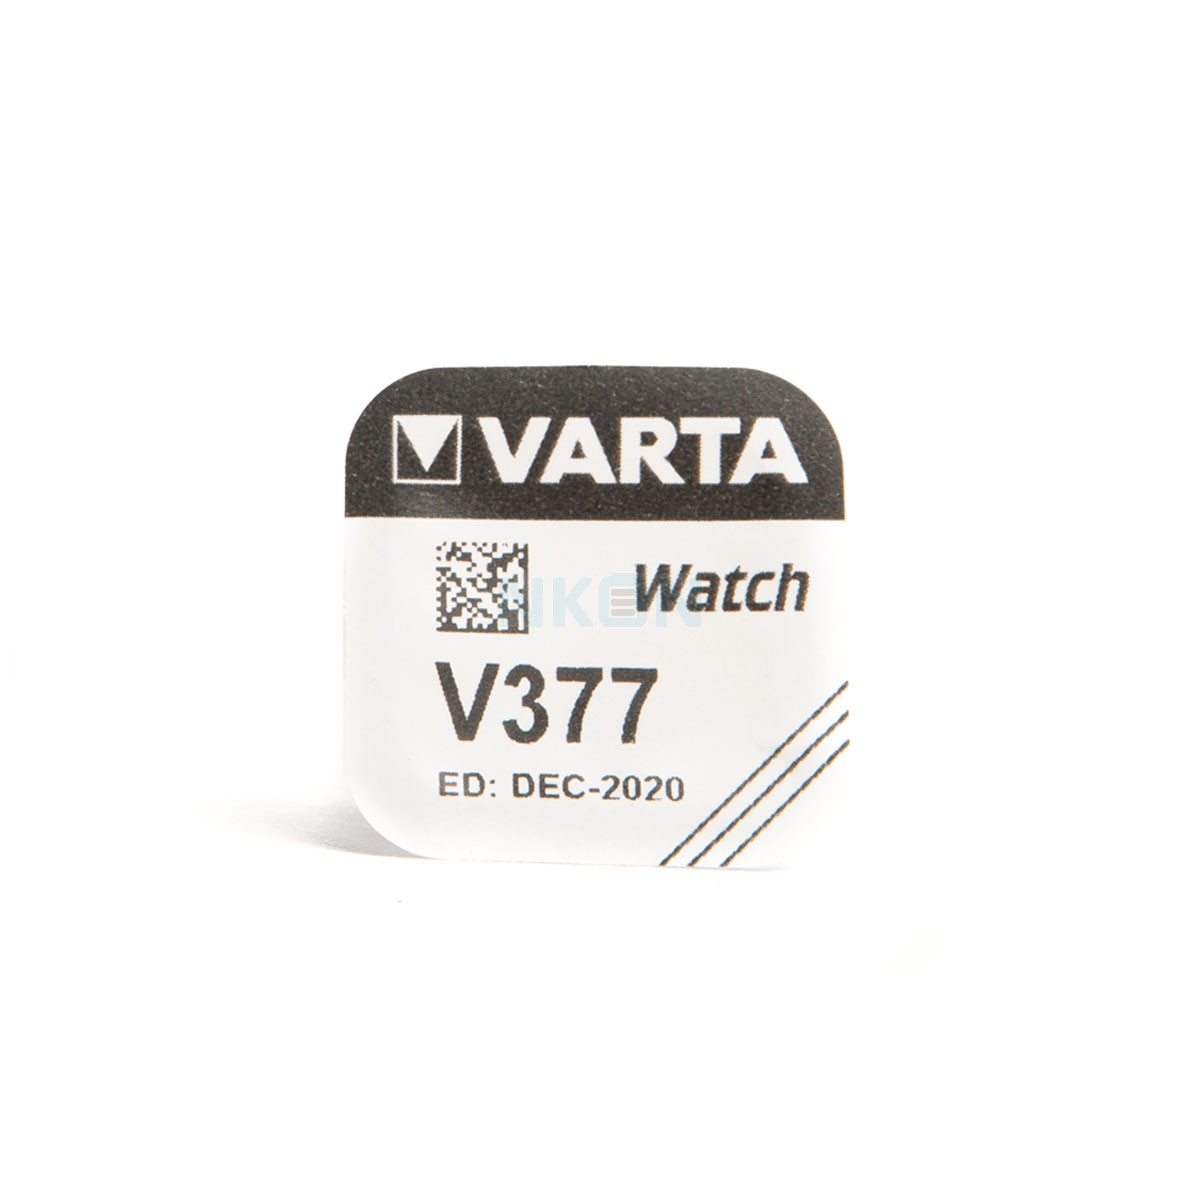 Varta 377 - 1.55V - Watch Batteries - Disposable batteries